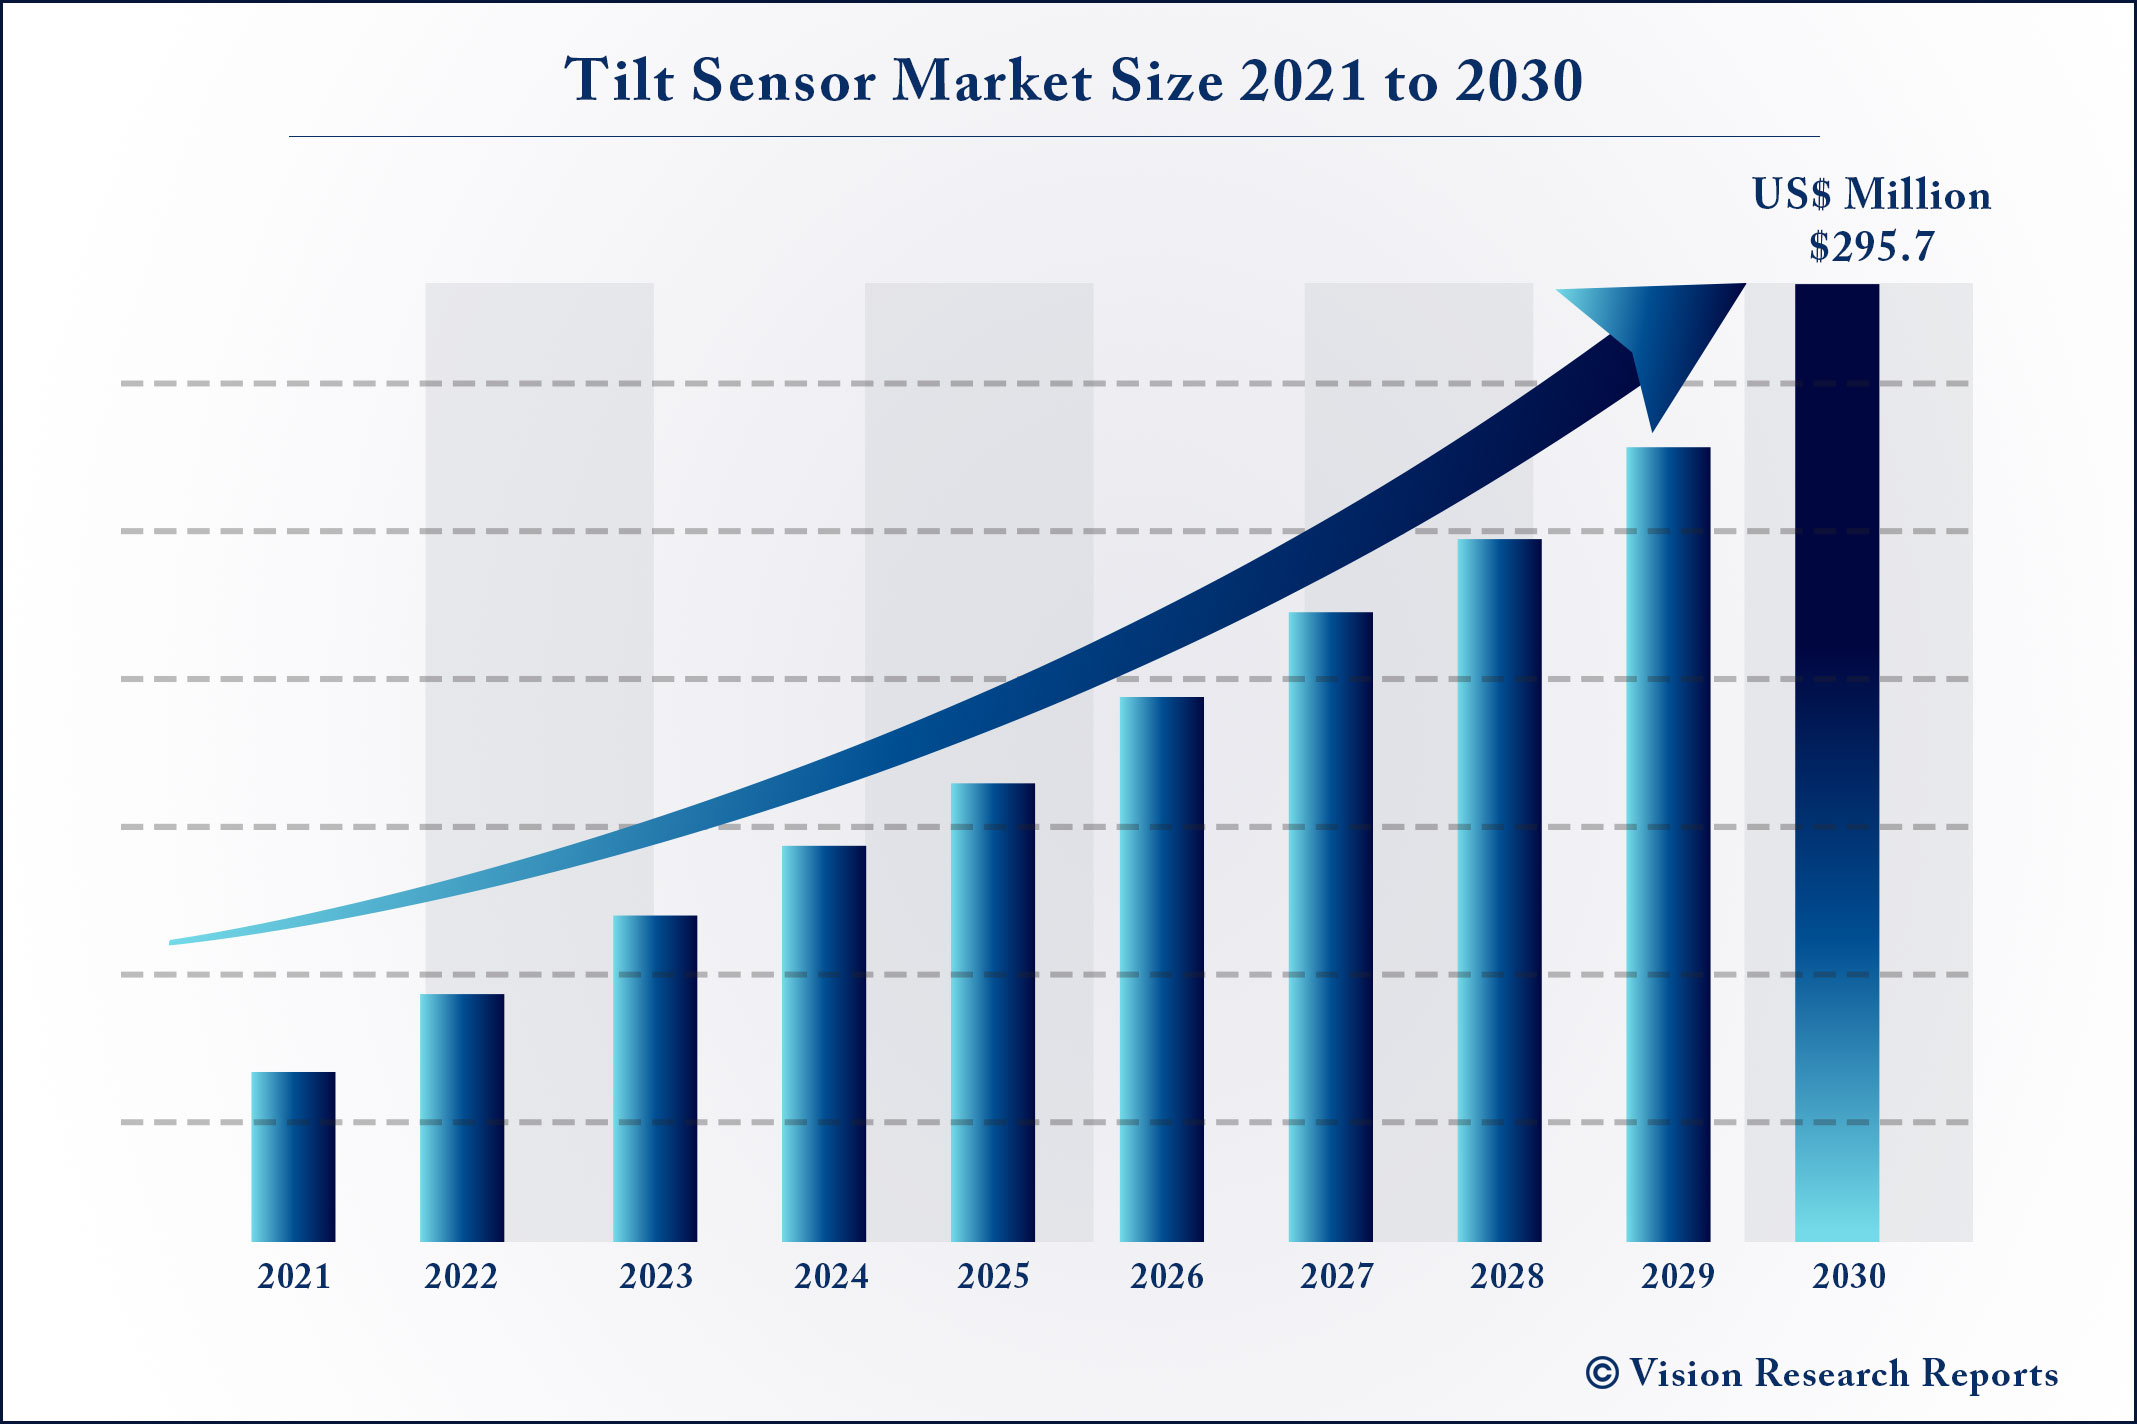 Tilt Sensor Market Size 2021 to 2030